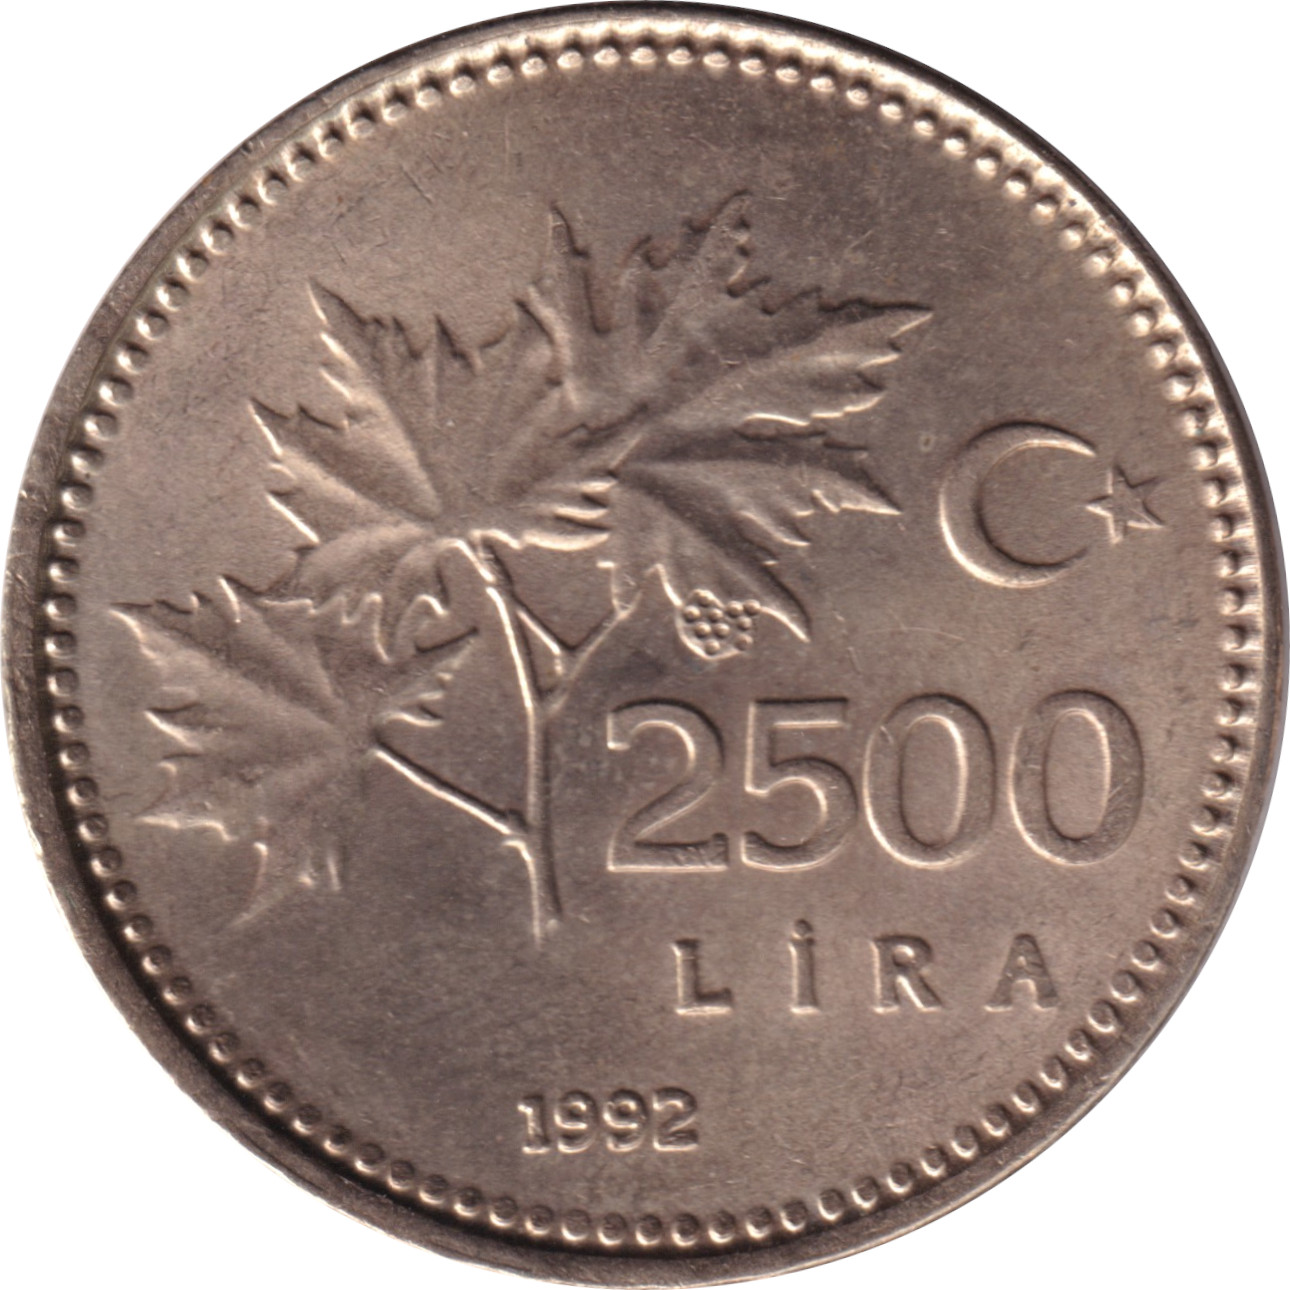 2500 lira - Moustafa Kemal